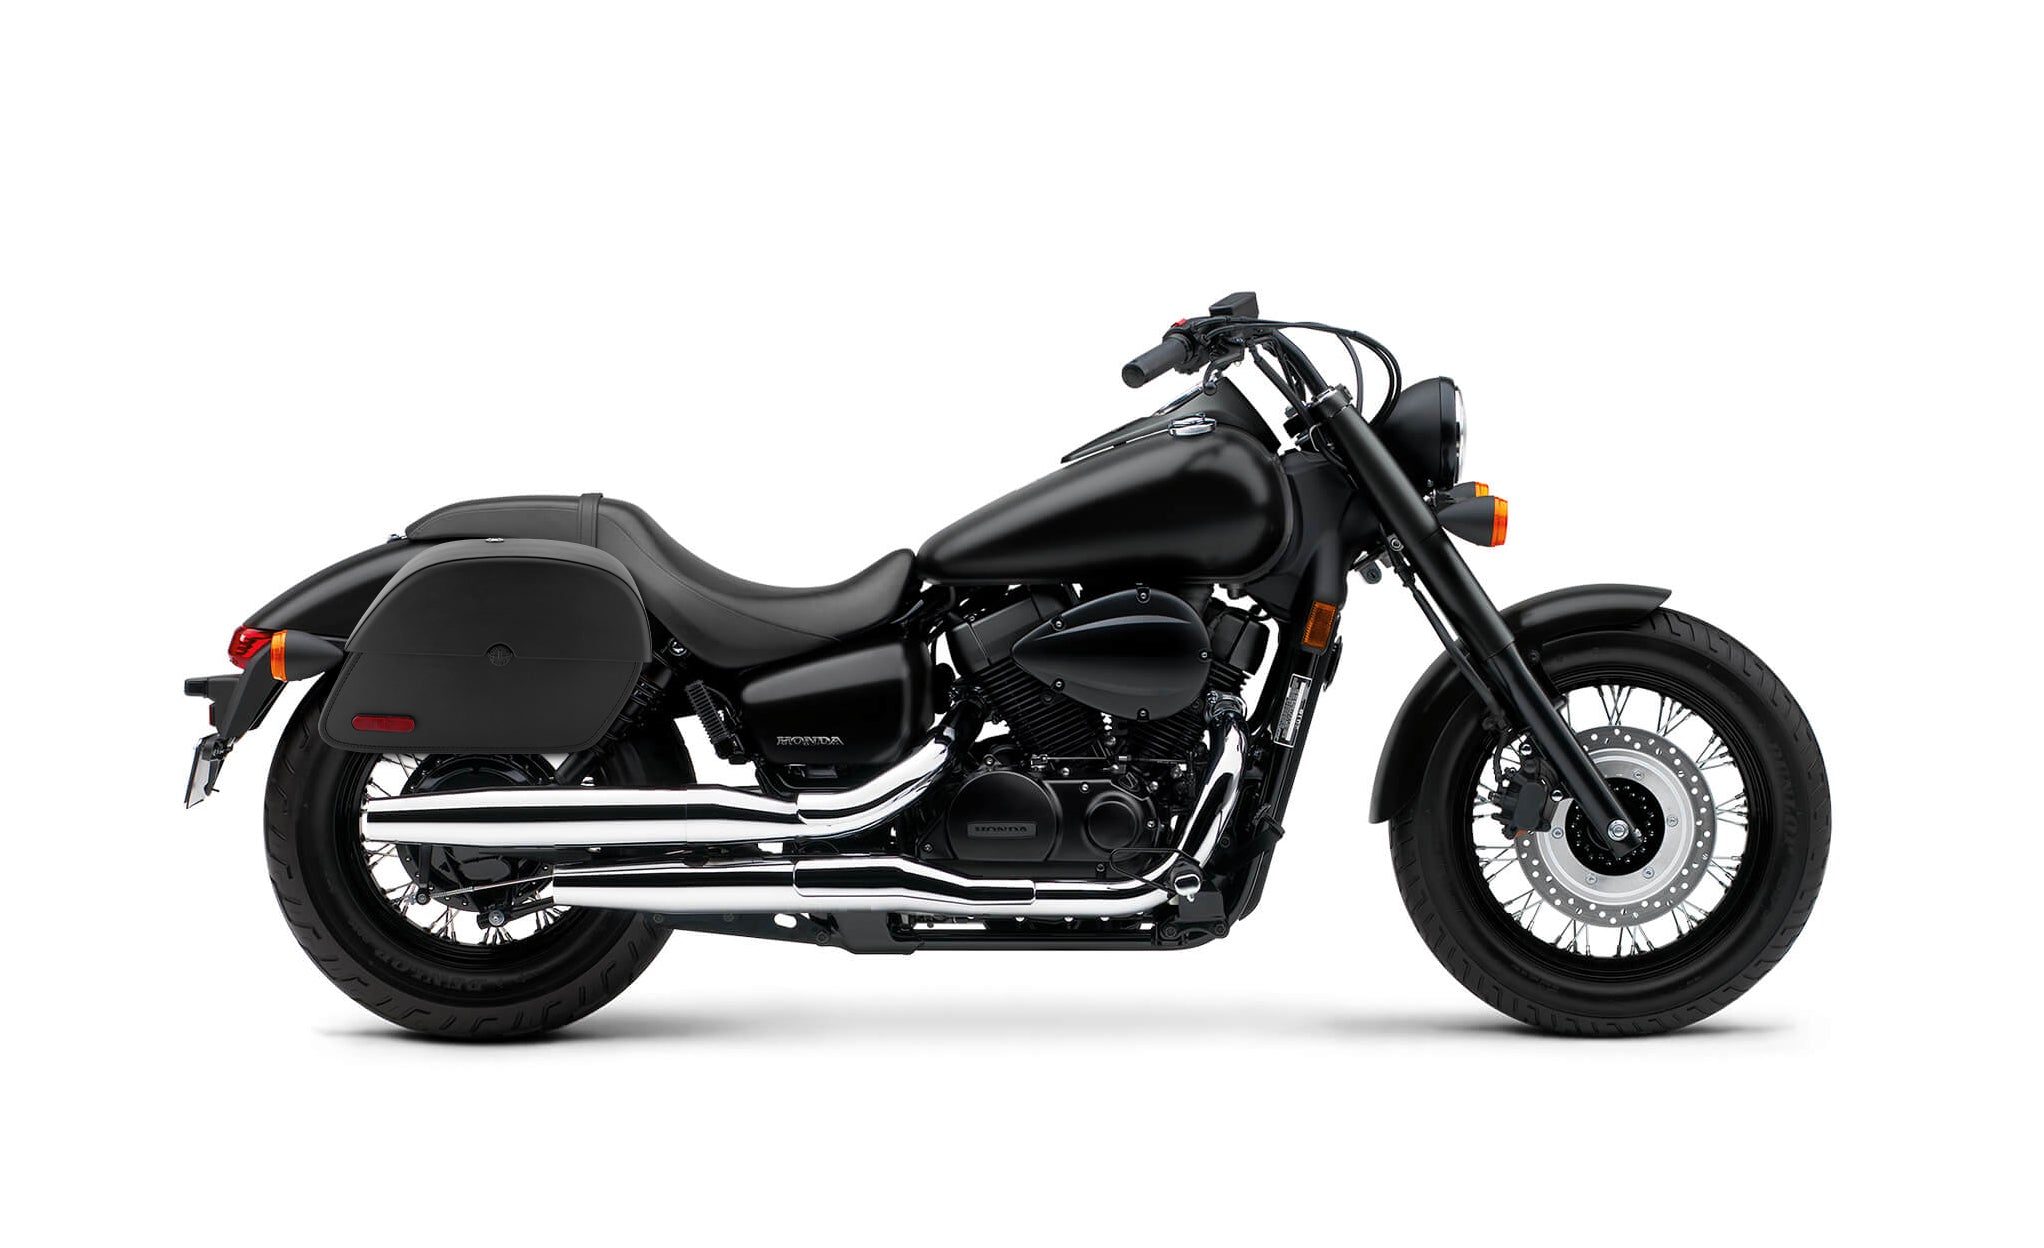 Viking Panzer Medium Honda Shadow 750 Phantom Leather Motorcycle Saddlebags Engineering Excellence with Bag on Bike @expand